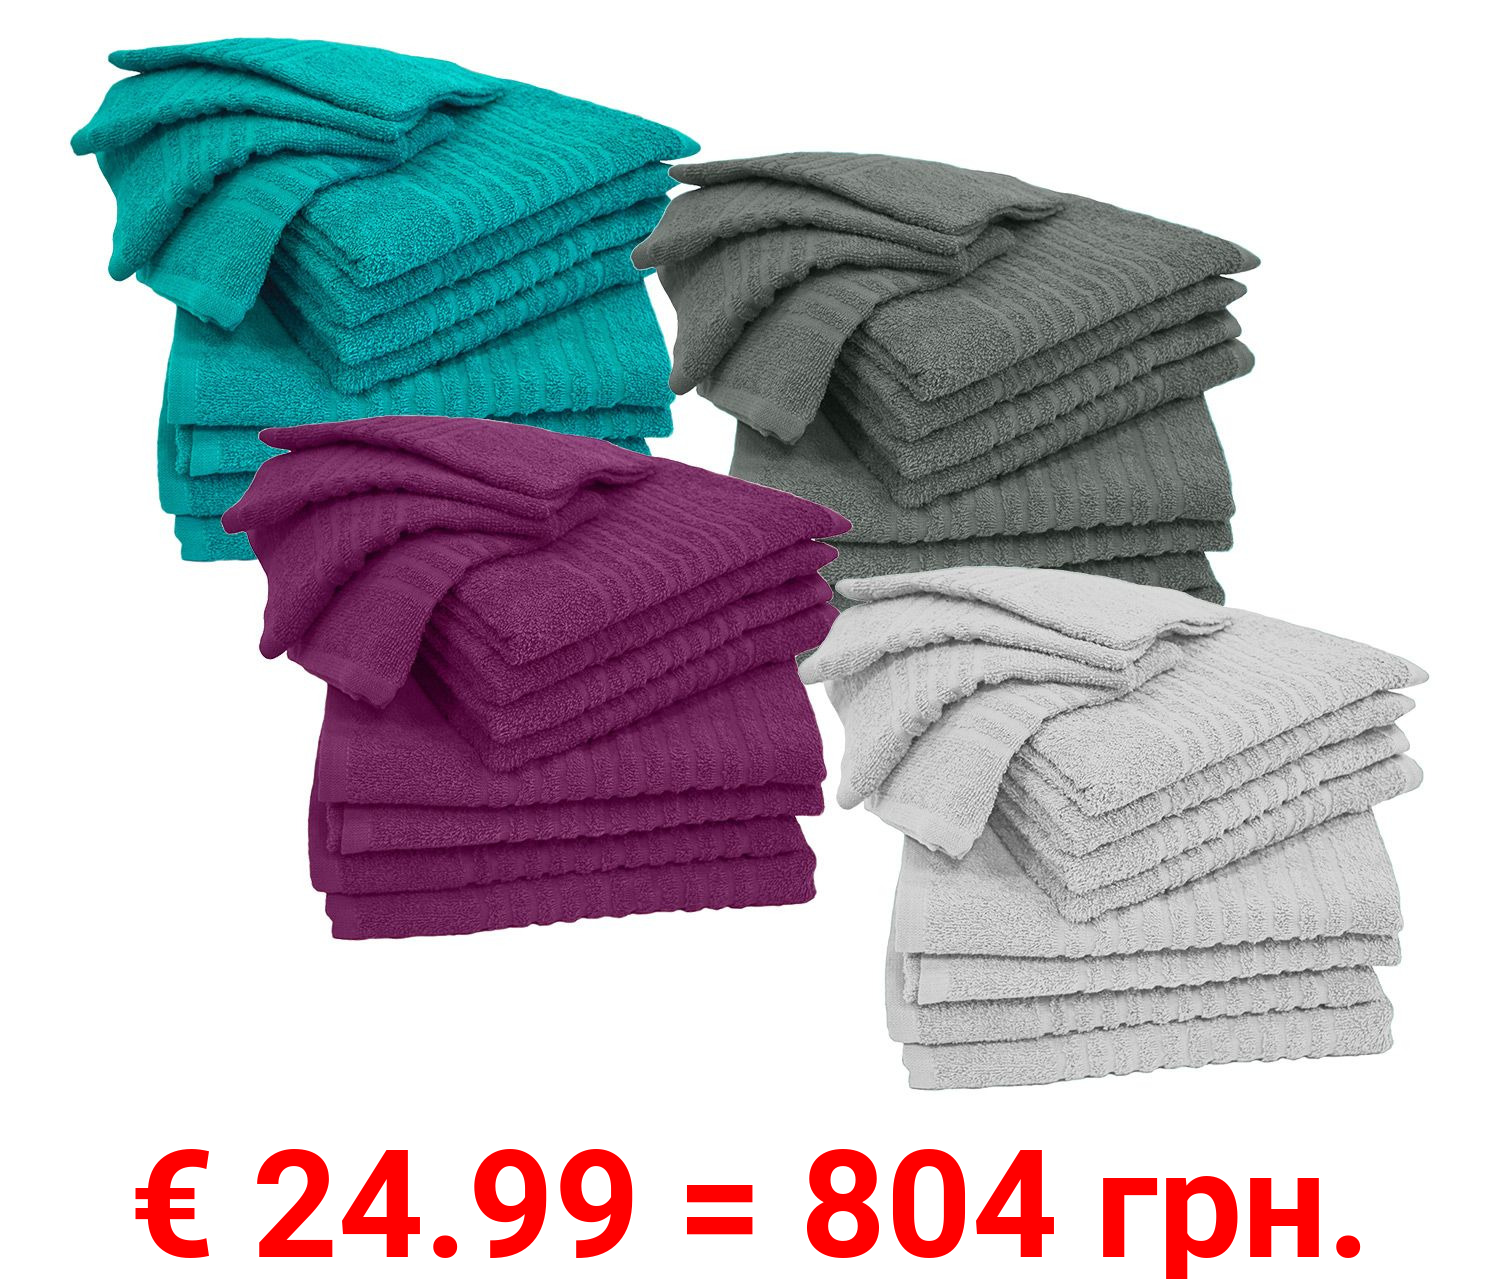 Kinzler Handtuch-Set 12teilig, Frottierset: Duschtuch, Handtuch, Gästetuch, aus Baumwolle